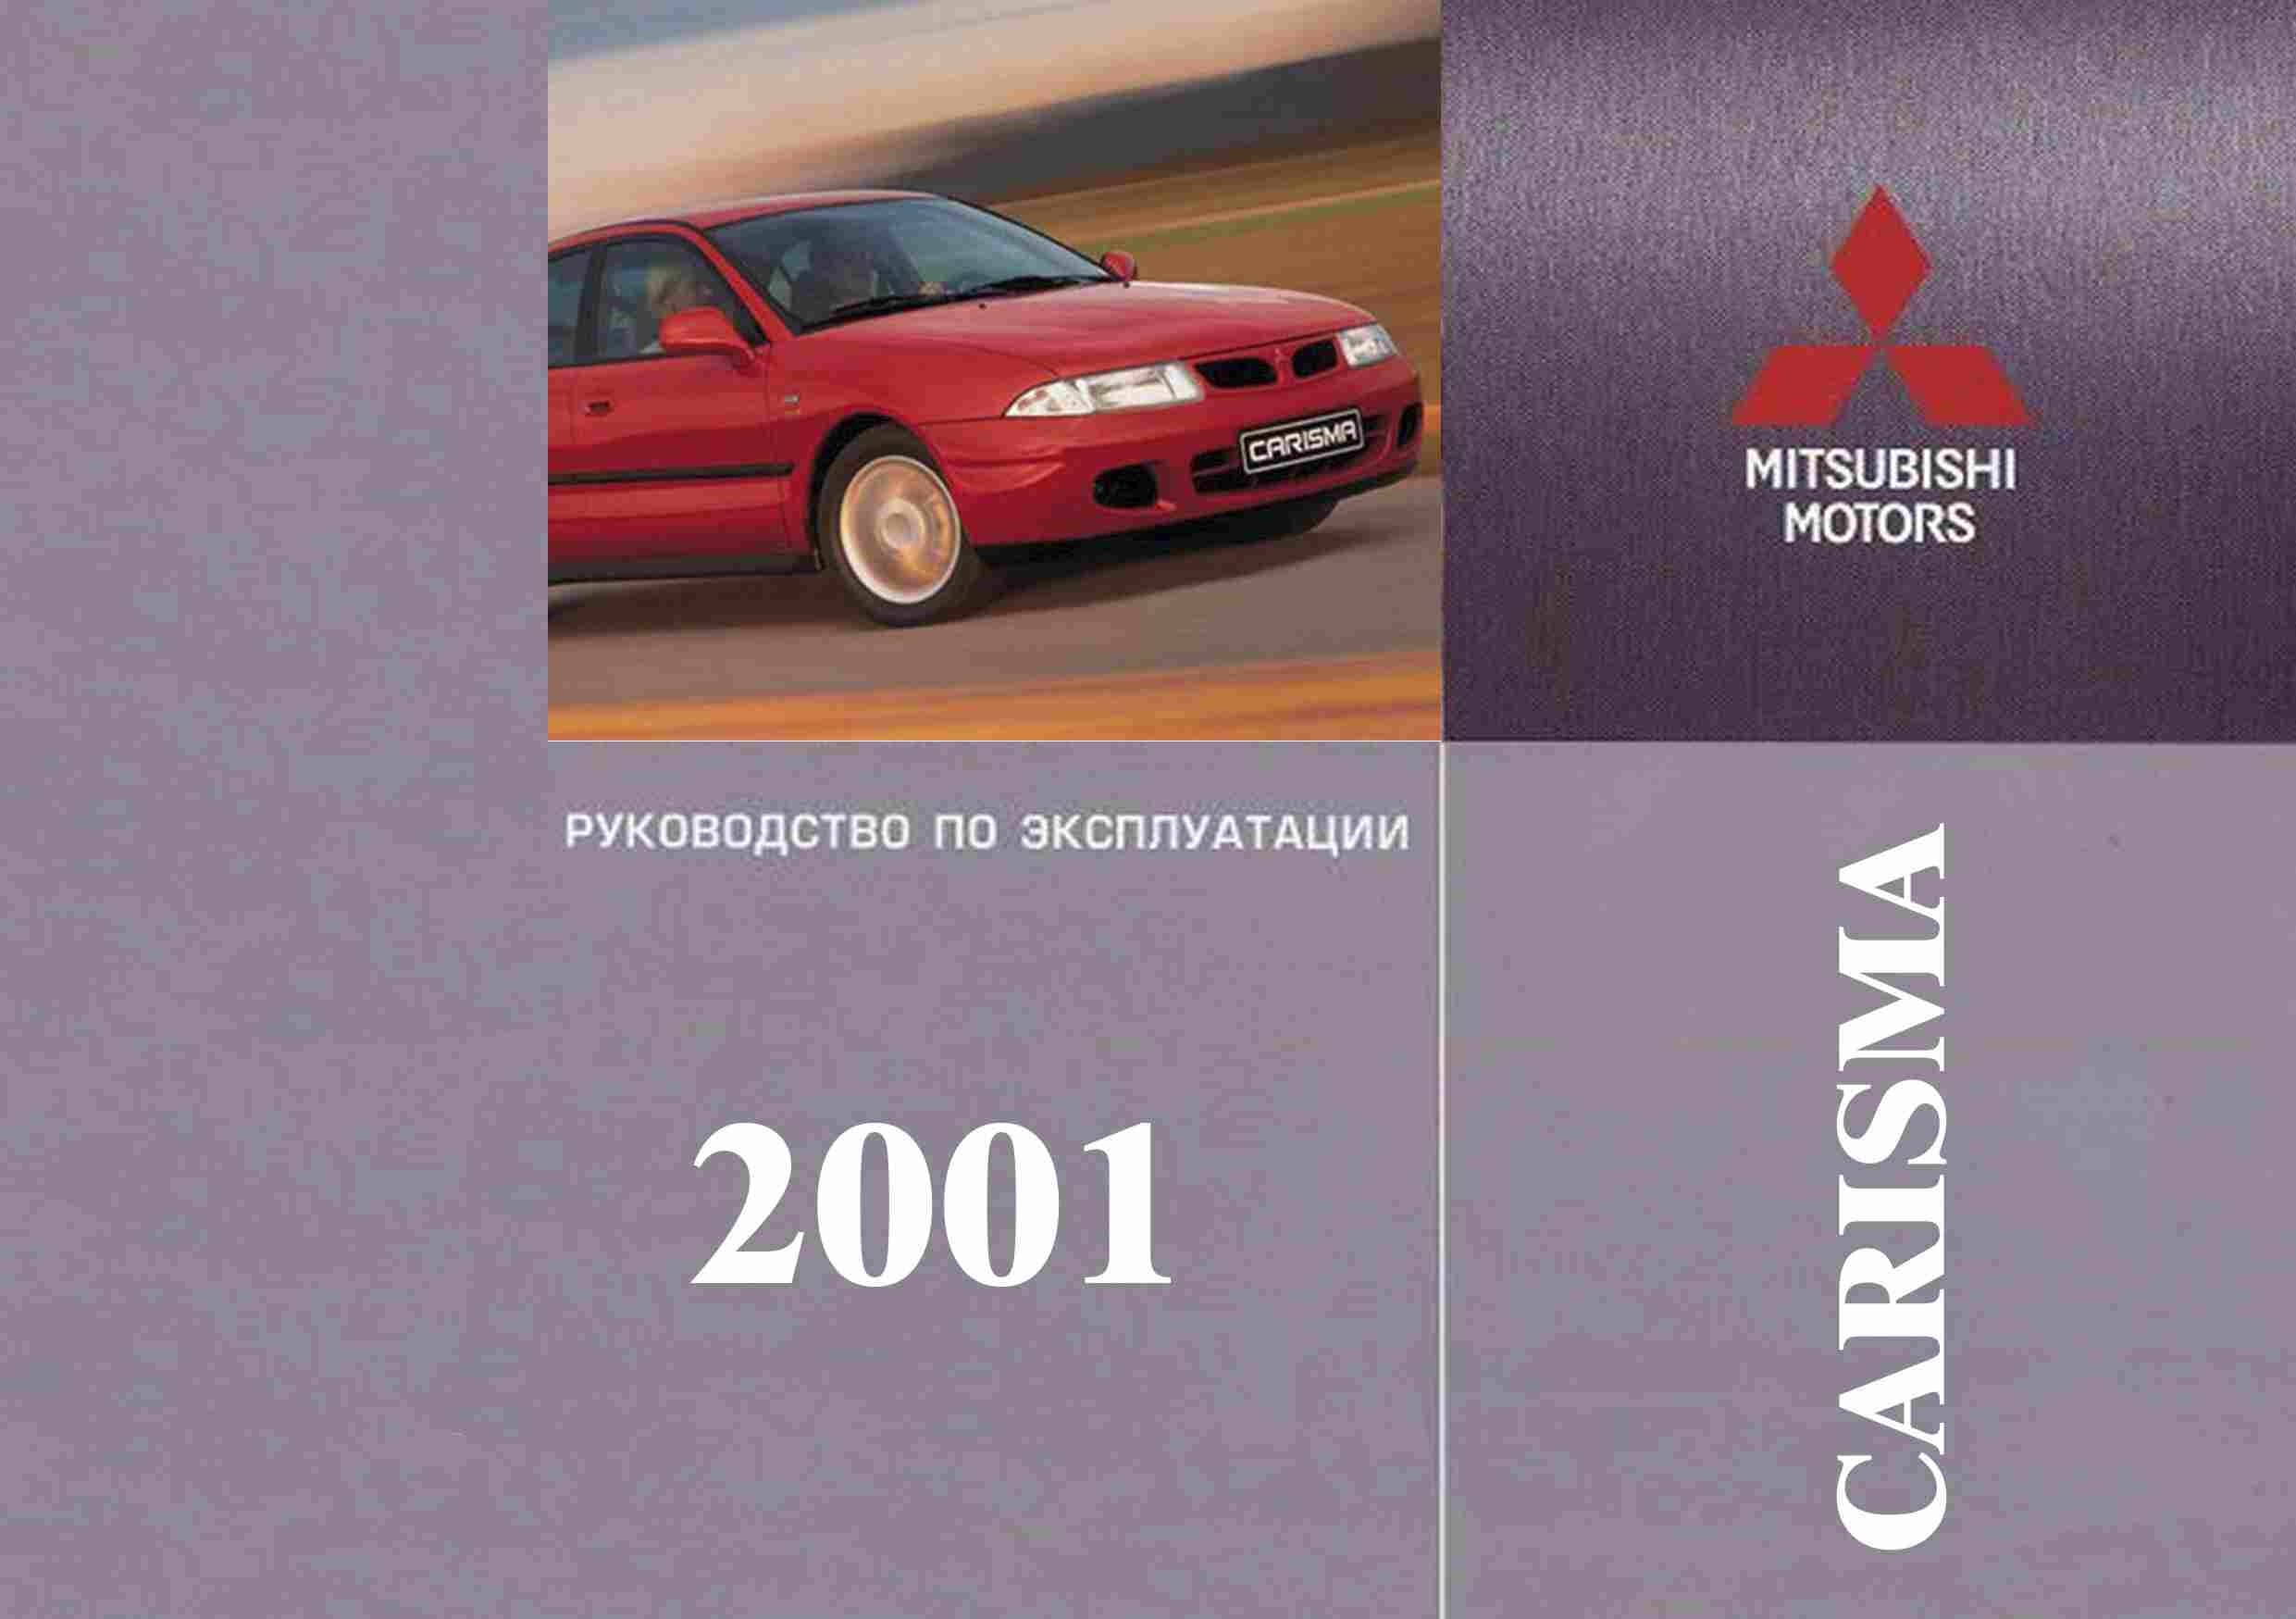 Mitsubishi Carisma 2001 Руководство по эксплуатации обложка